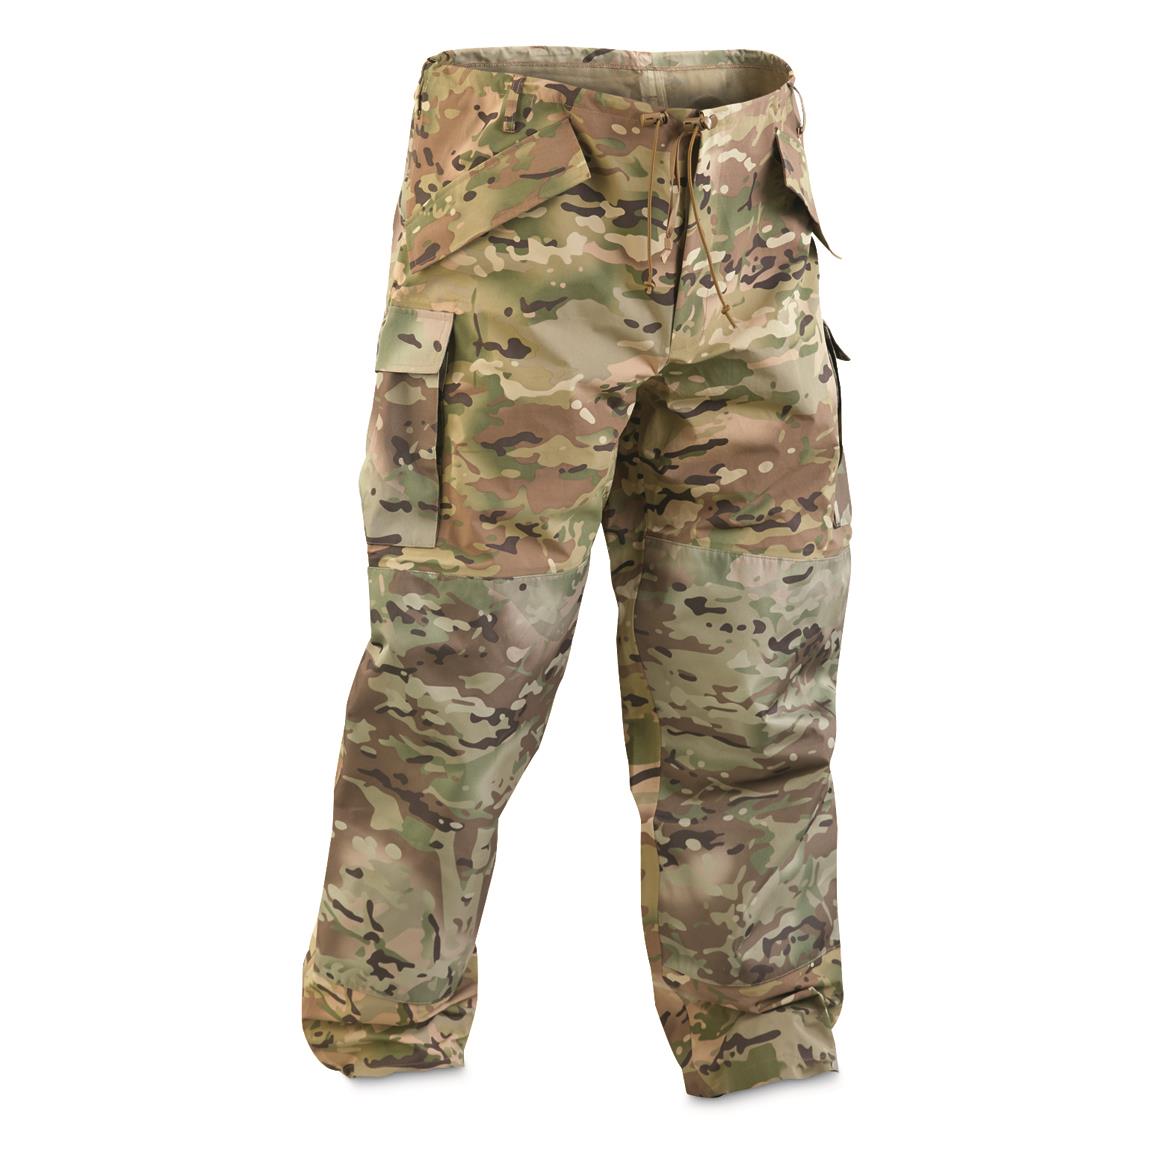 Buy > ocp tactical pants > in stock